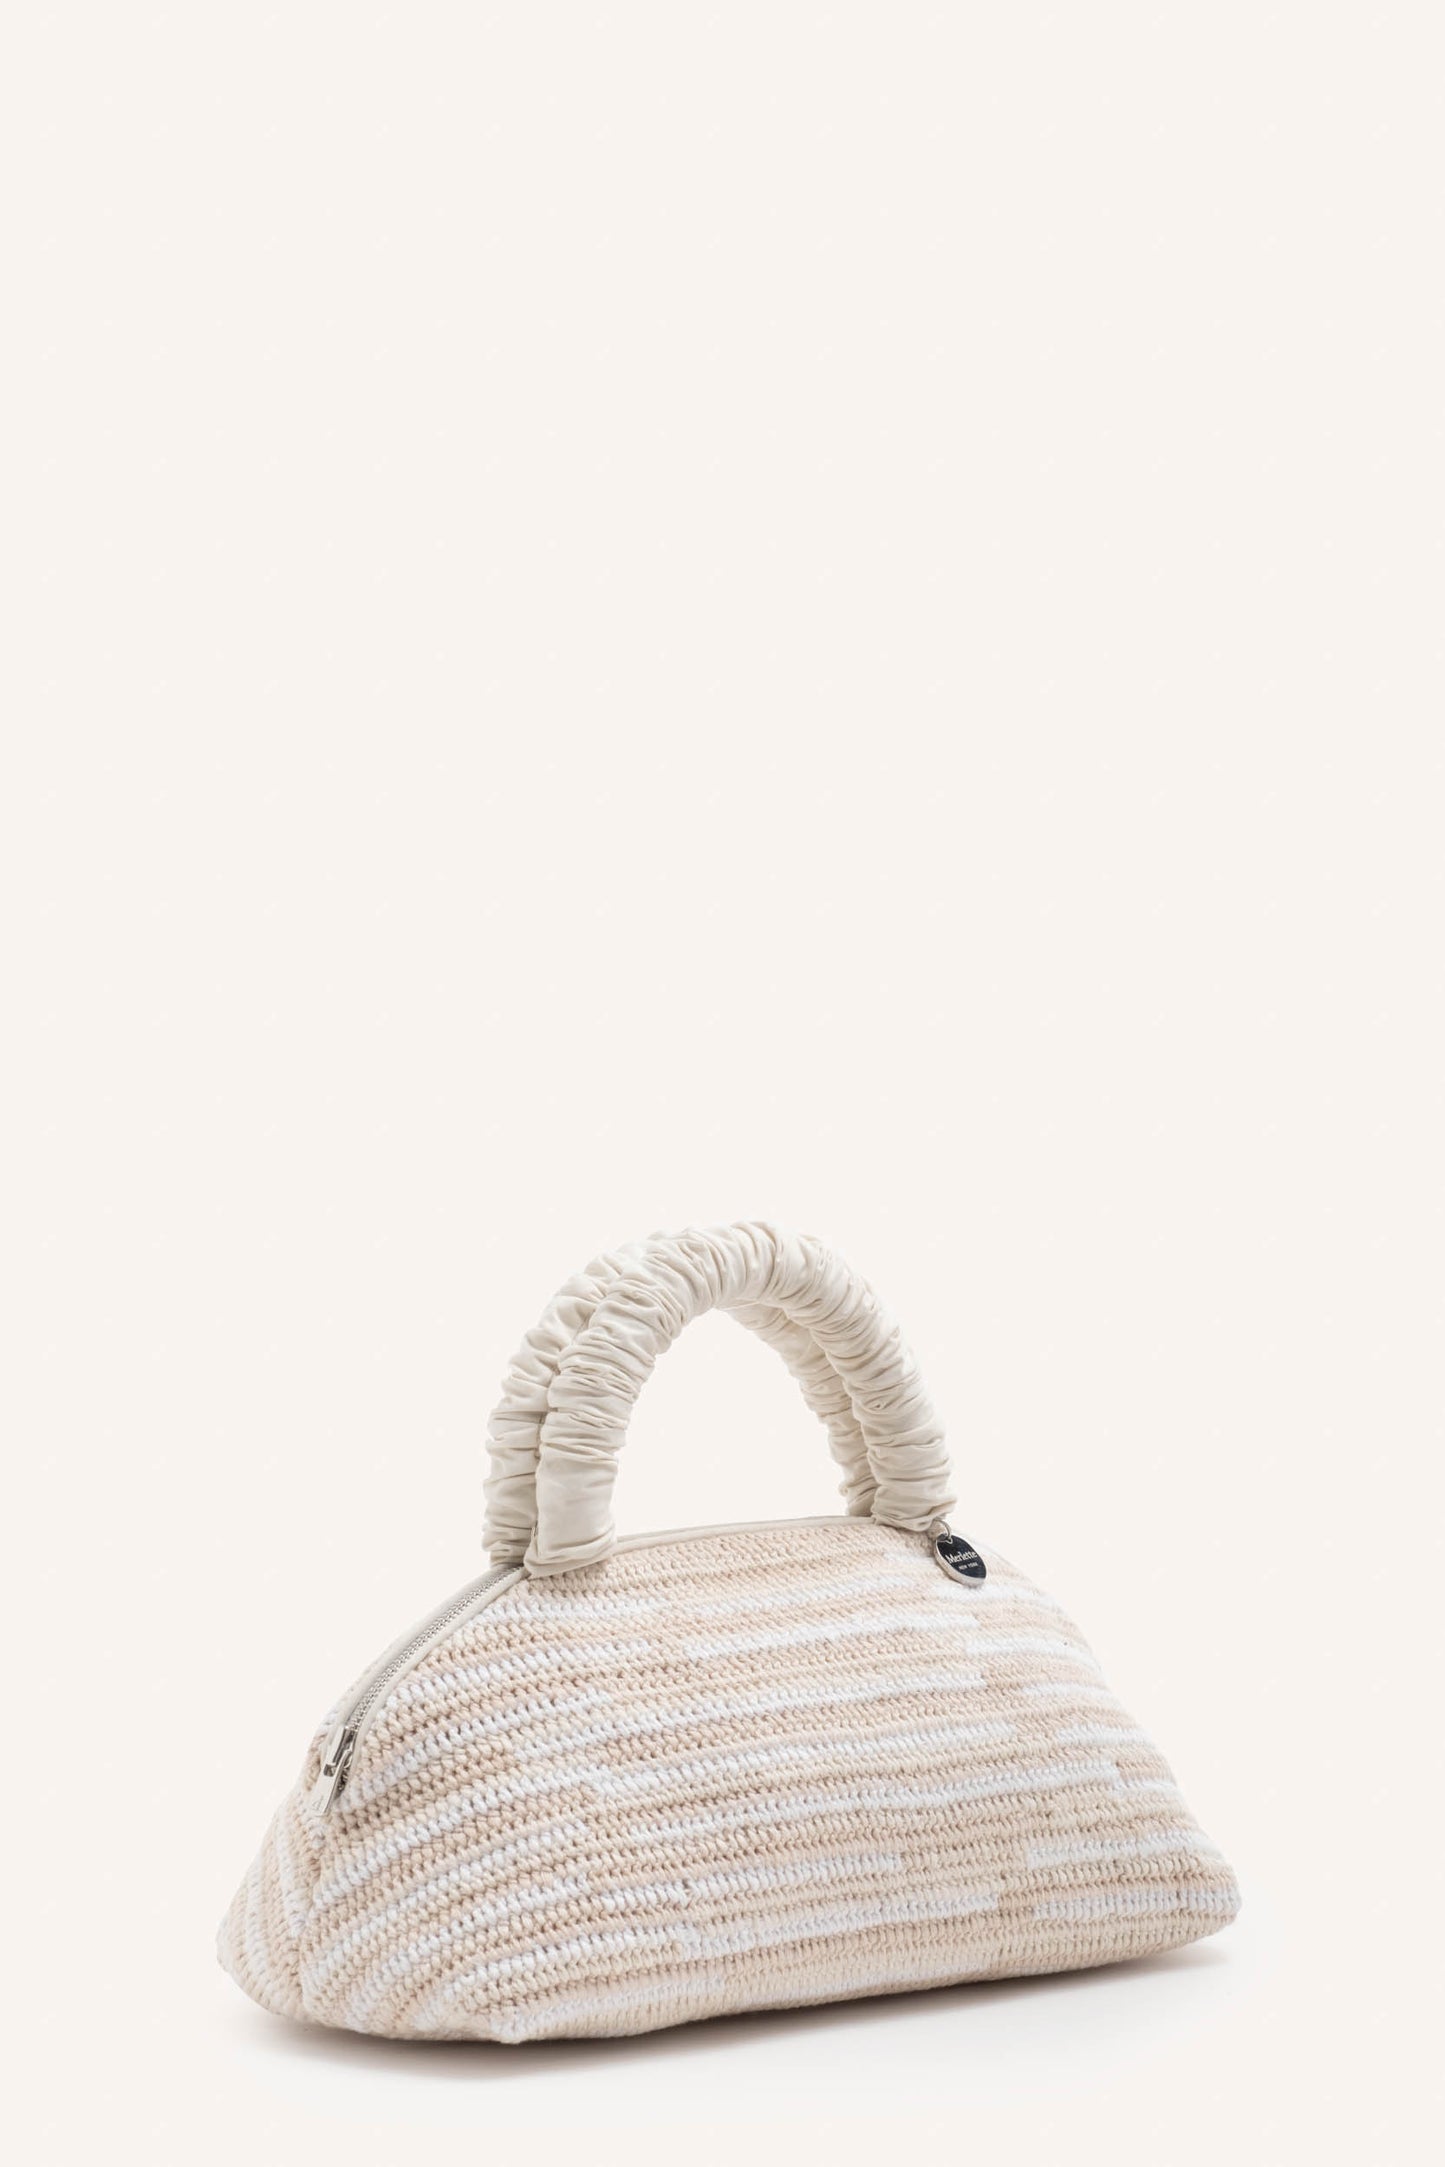 Lune Mini Macrame Bag in Ivory Multi